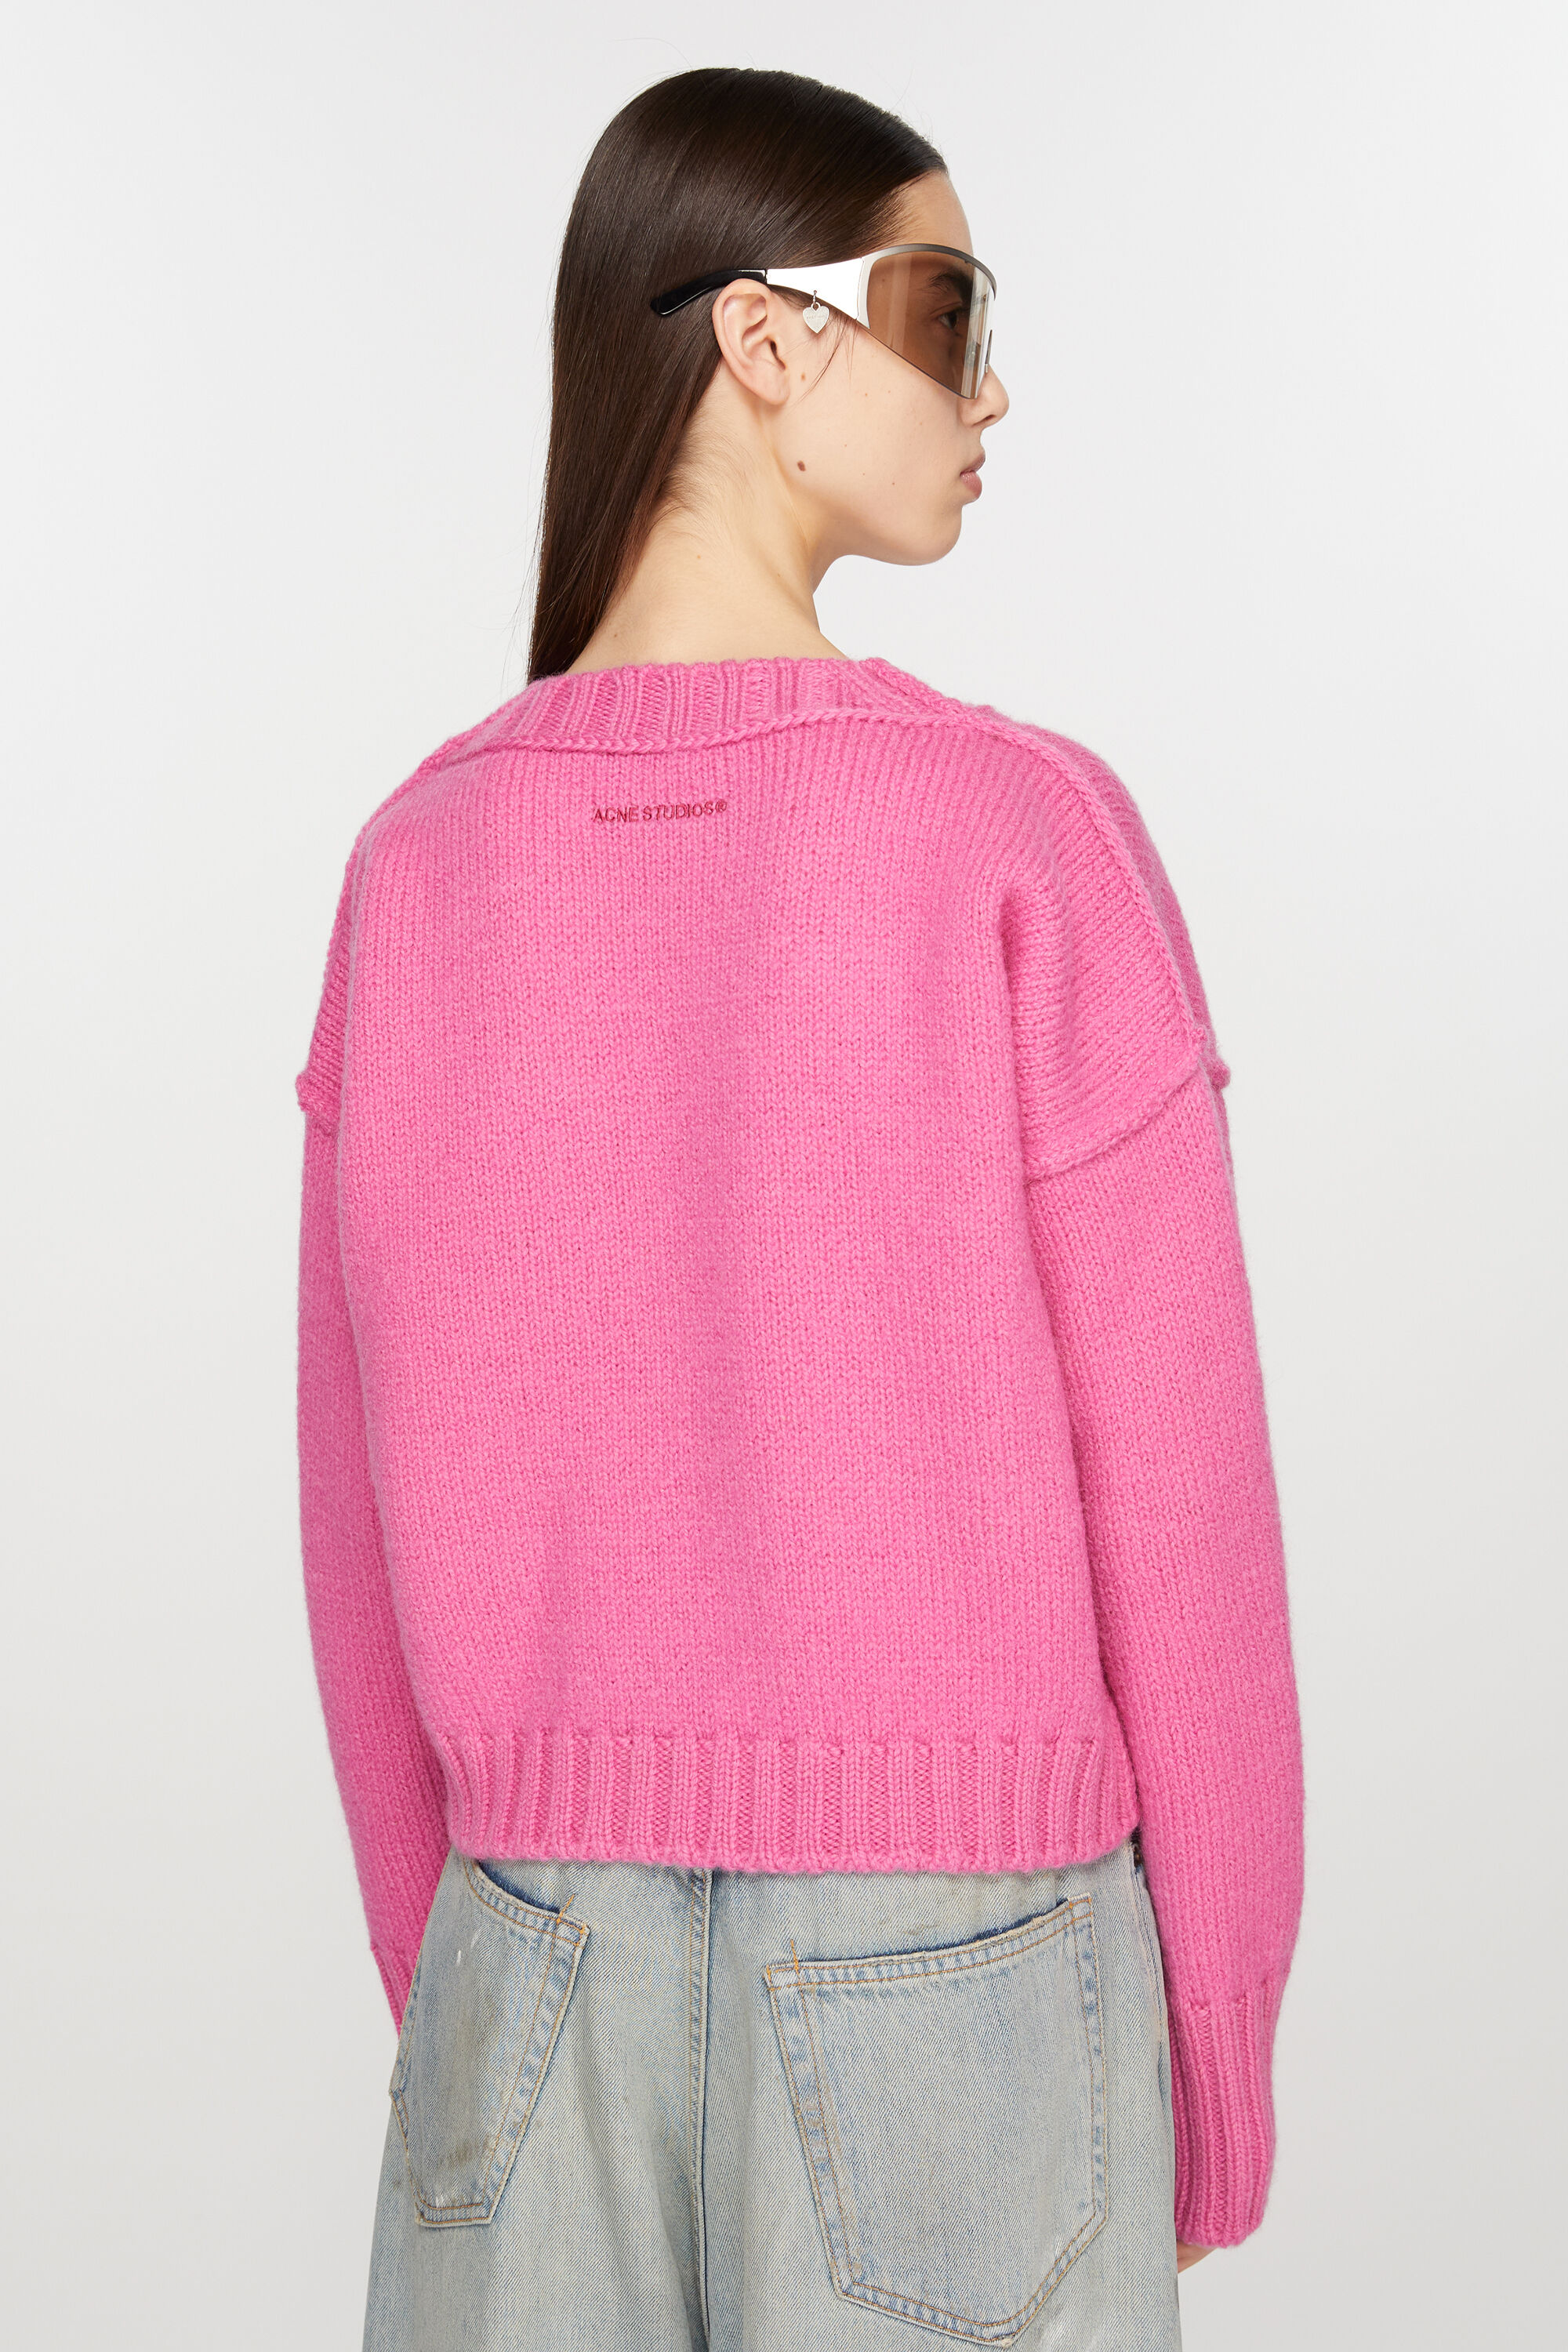 Acne Studios - Crew neck wool jumper - Pink